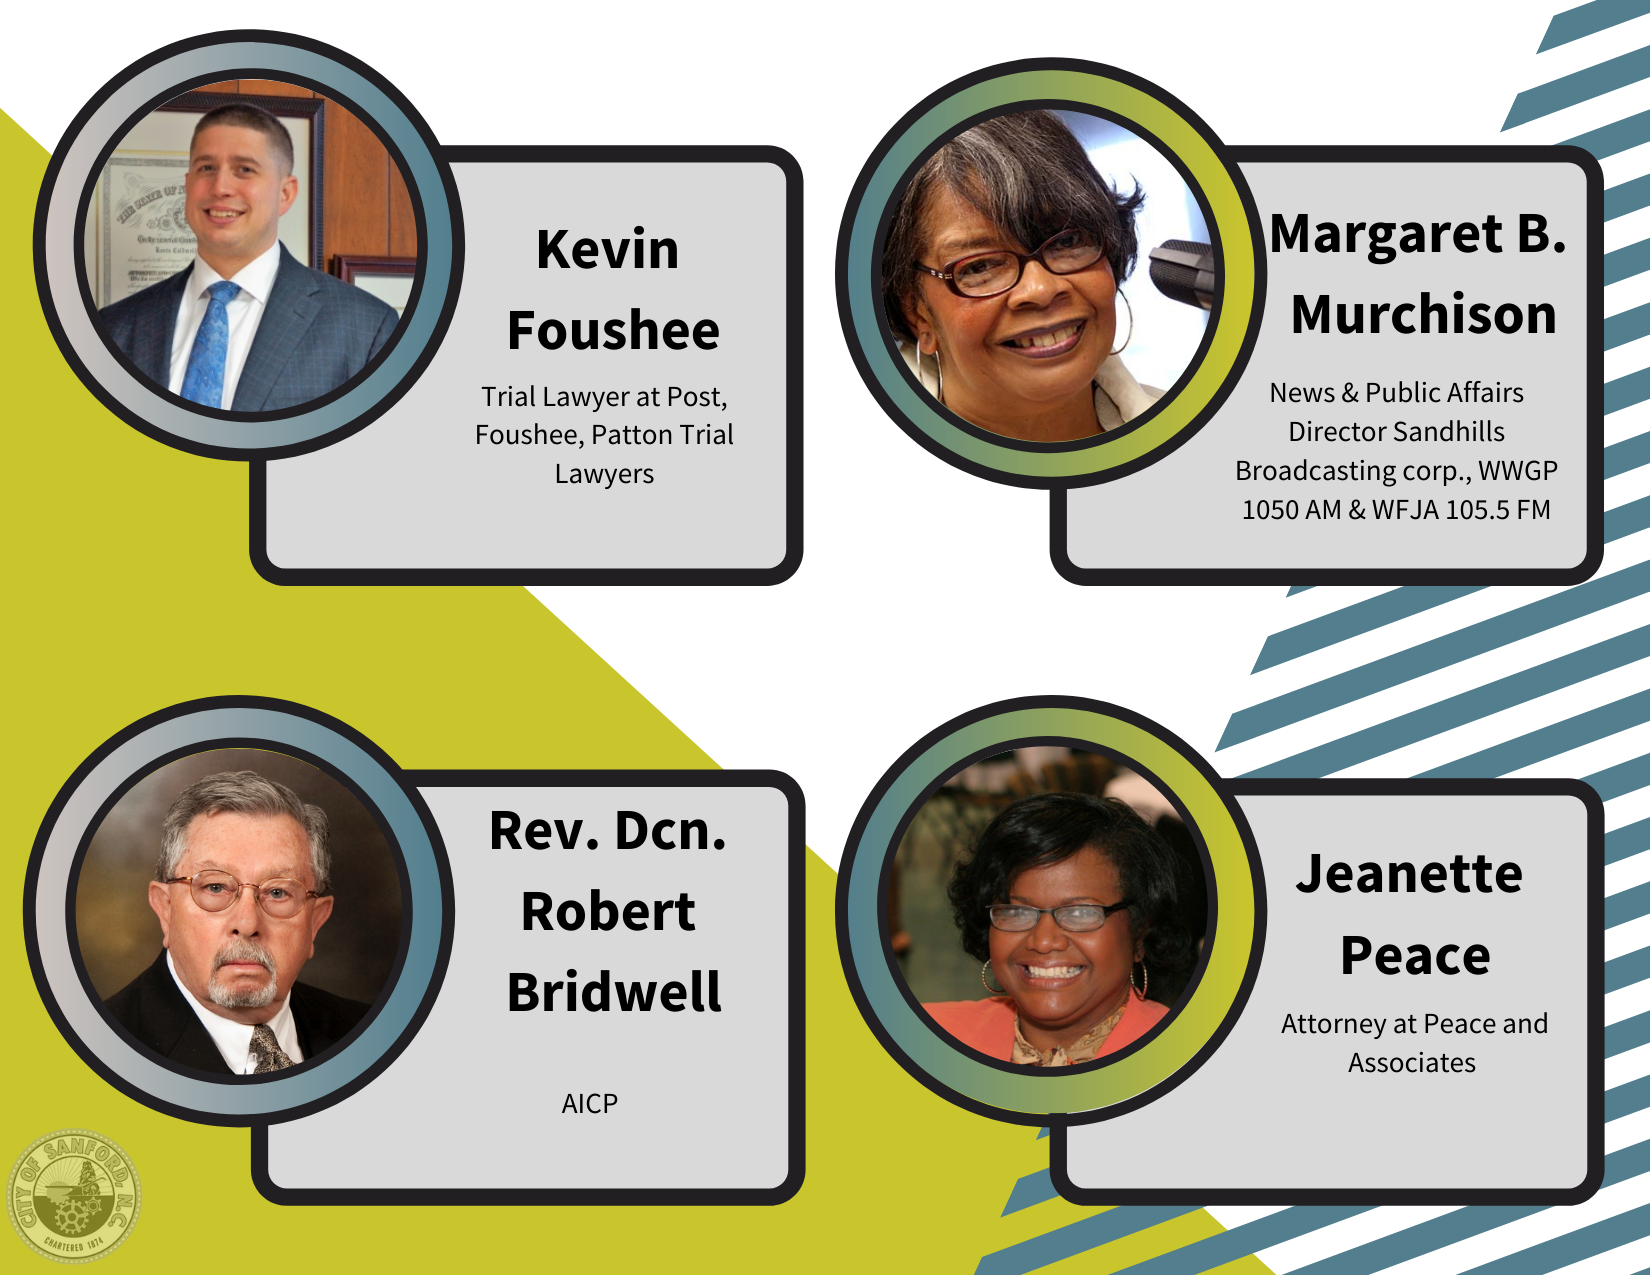 Left to right, clockwise: Kevin Foushee, Margaret B. Murchison, Jeanette Peace, Rev. Dcn. Robert Bridwell